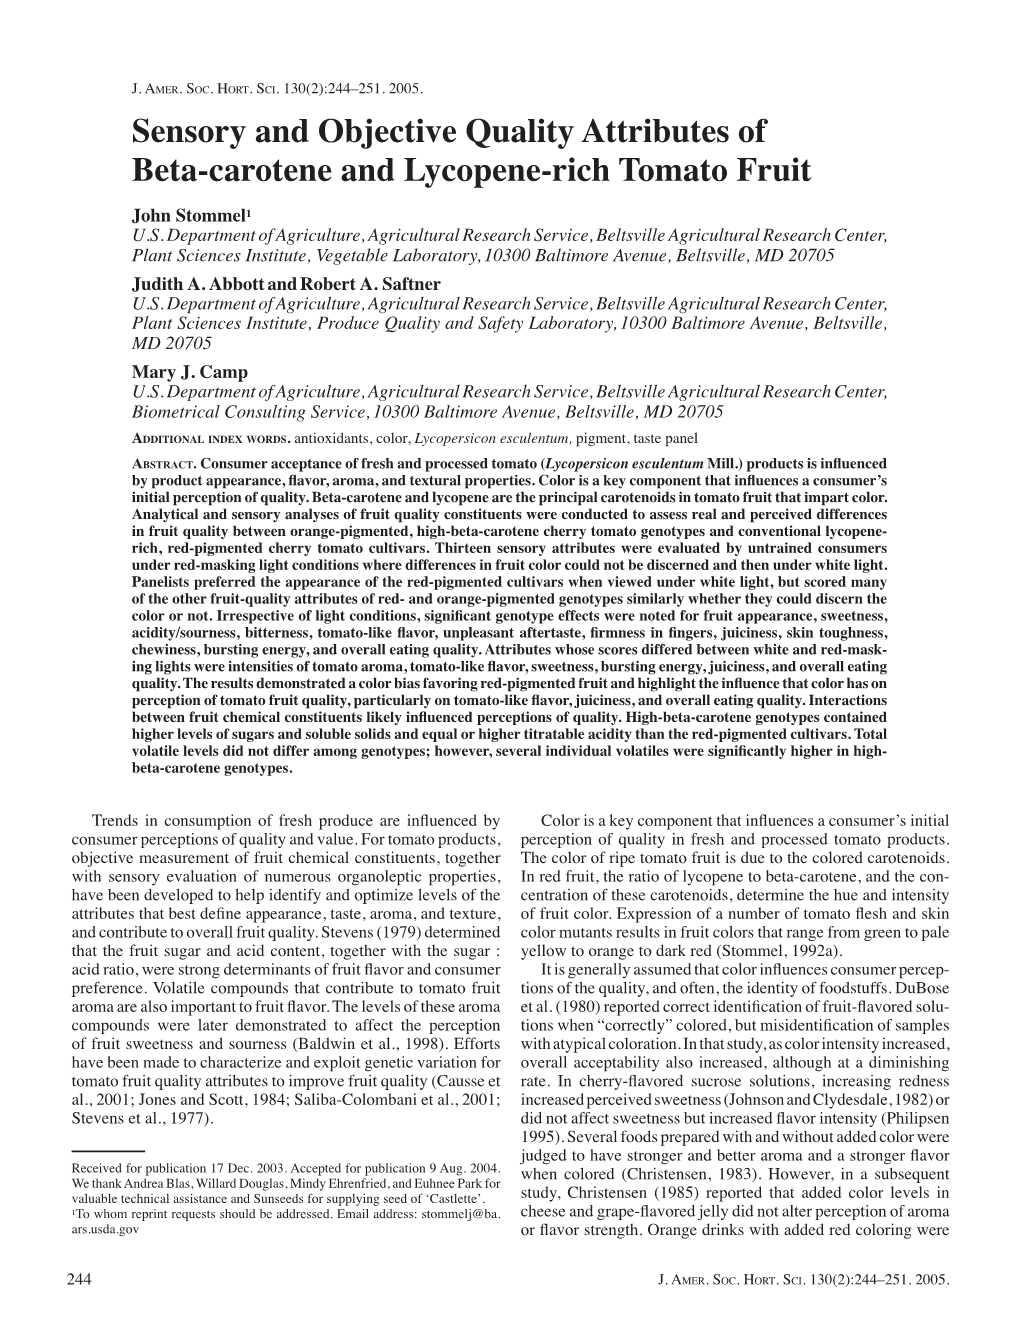 Sensory and Objective Quality Attributes of Beta-Carotene and Lycopene-Rich Tomato Fruit